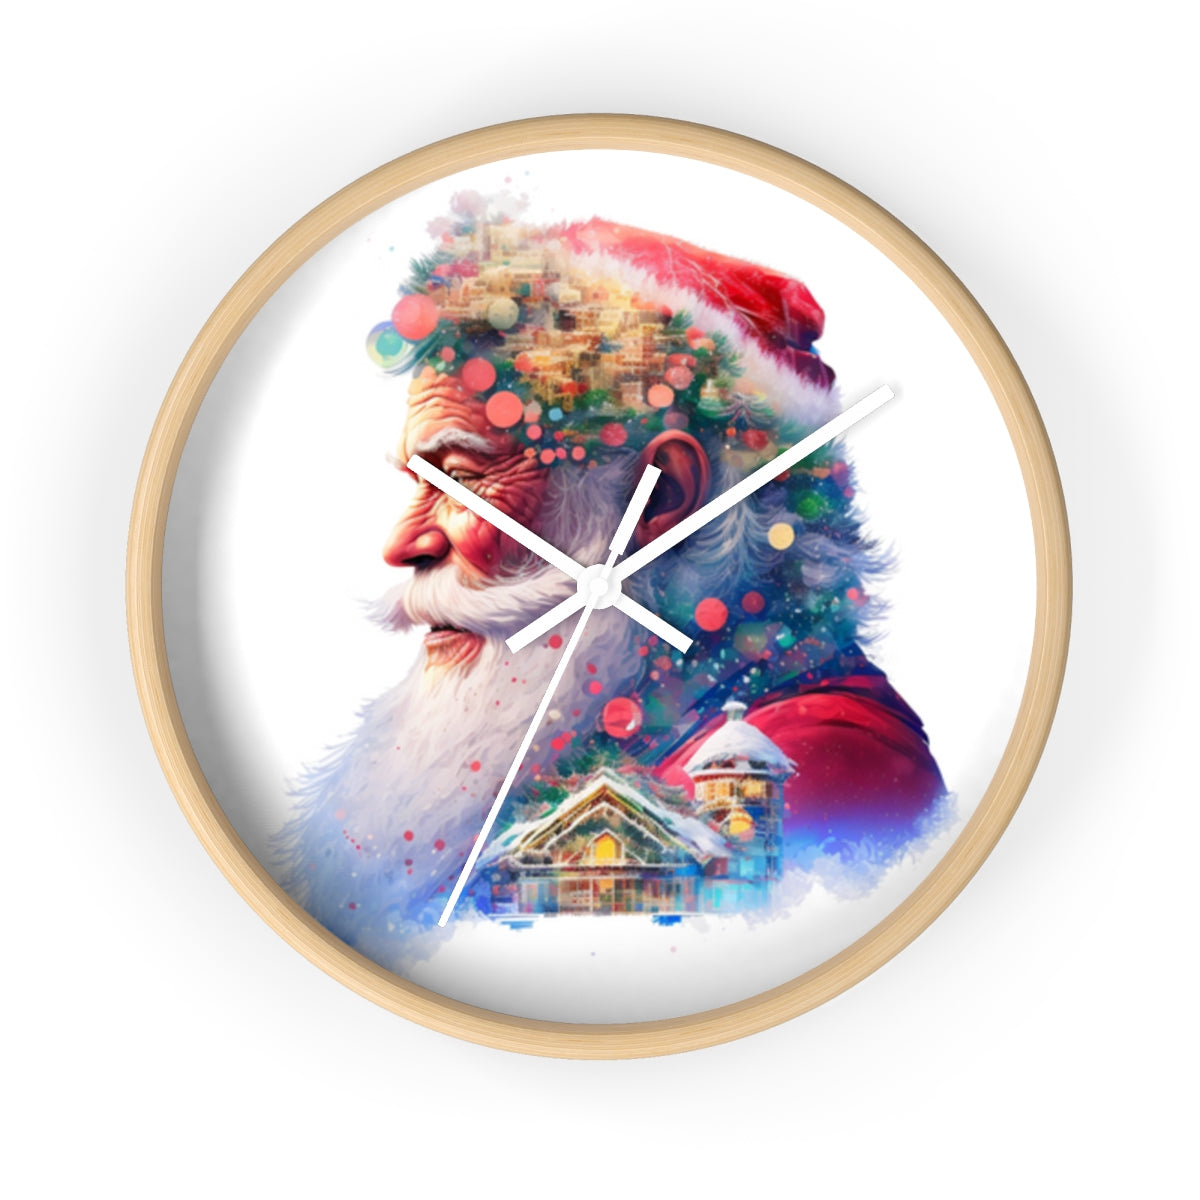 Neduz Designs Exposed Christmas Holidays Santa Claus Wall clock